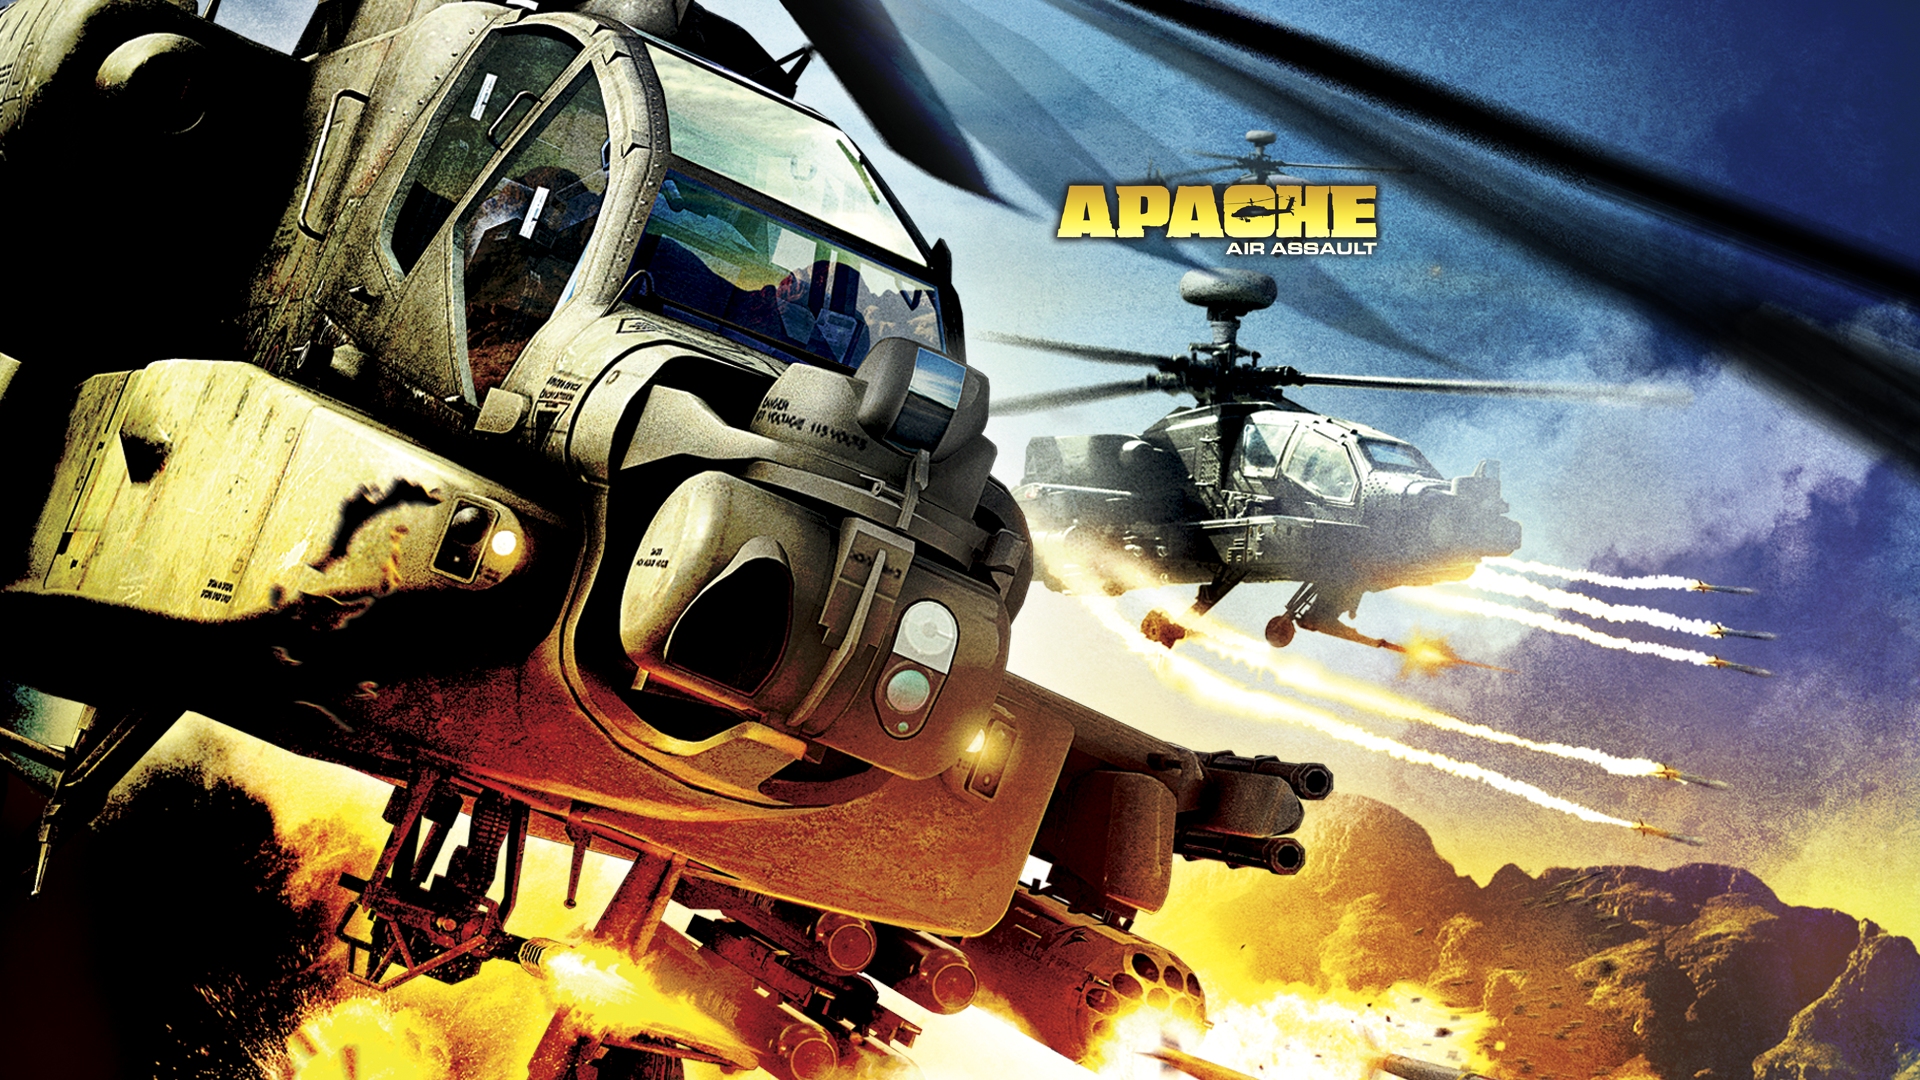 Apache air assault on steam фото 26